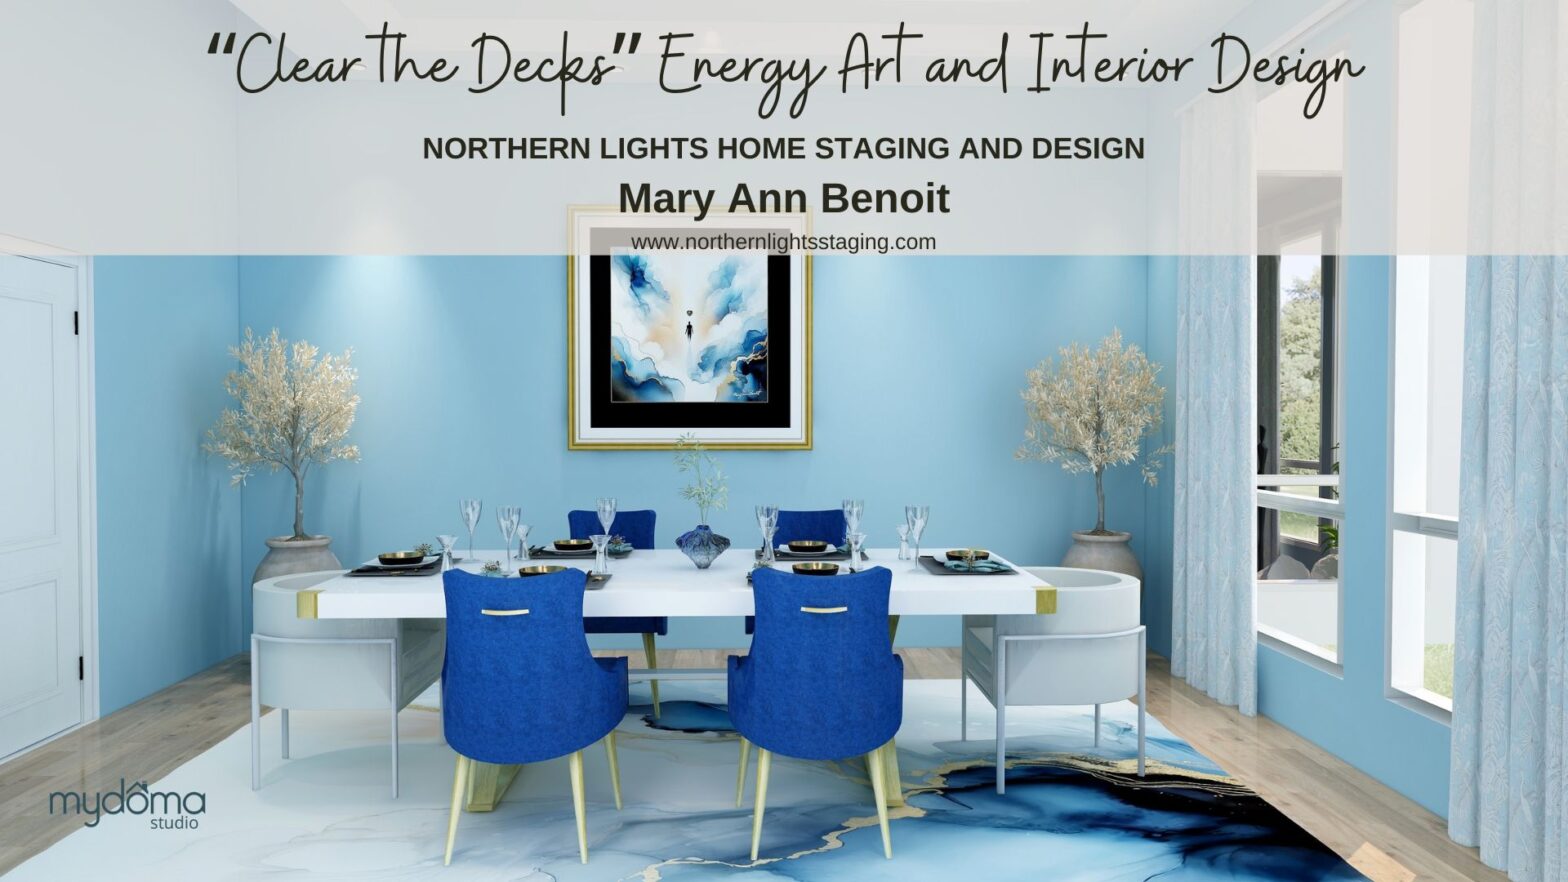 "Clear the Decks" Energy Art and Interior Design.